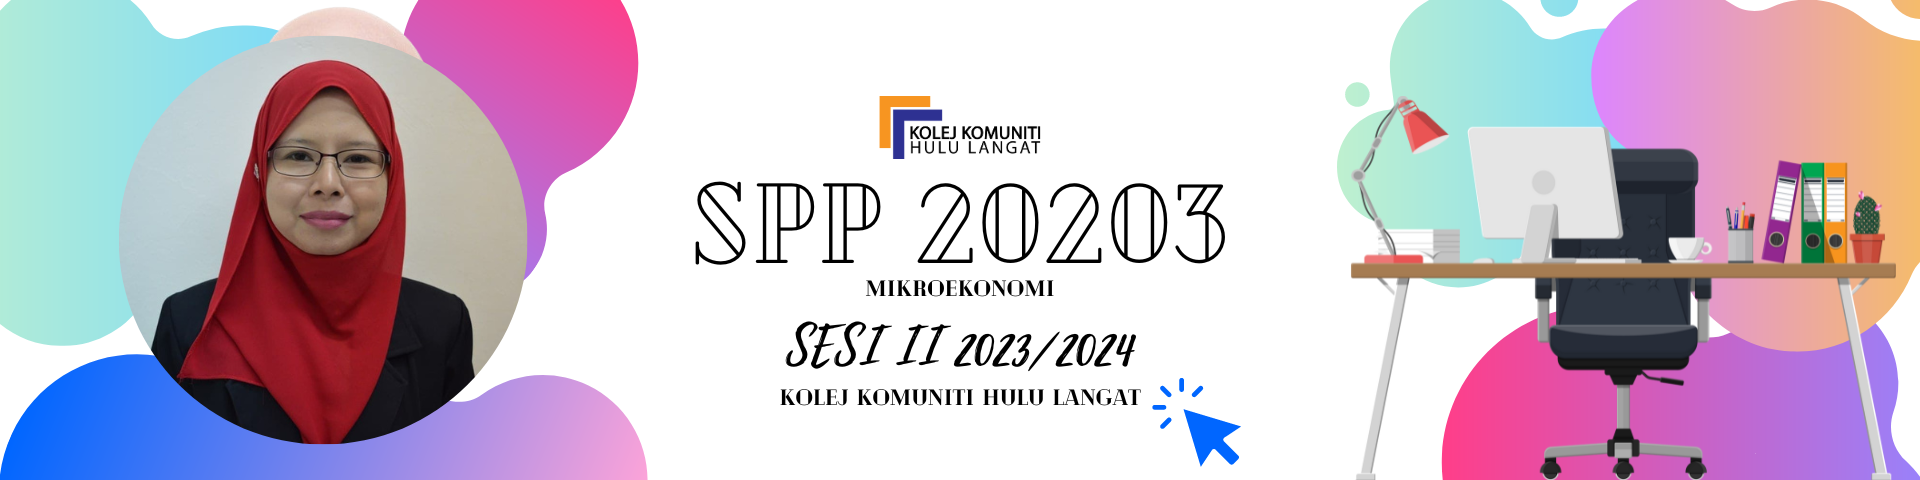 KKHL | SPP 20203 Mikroekonomi